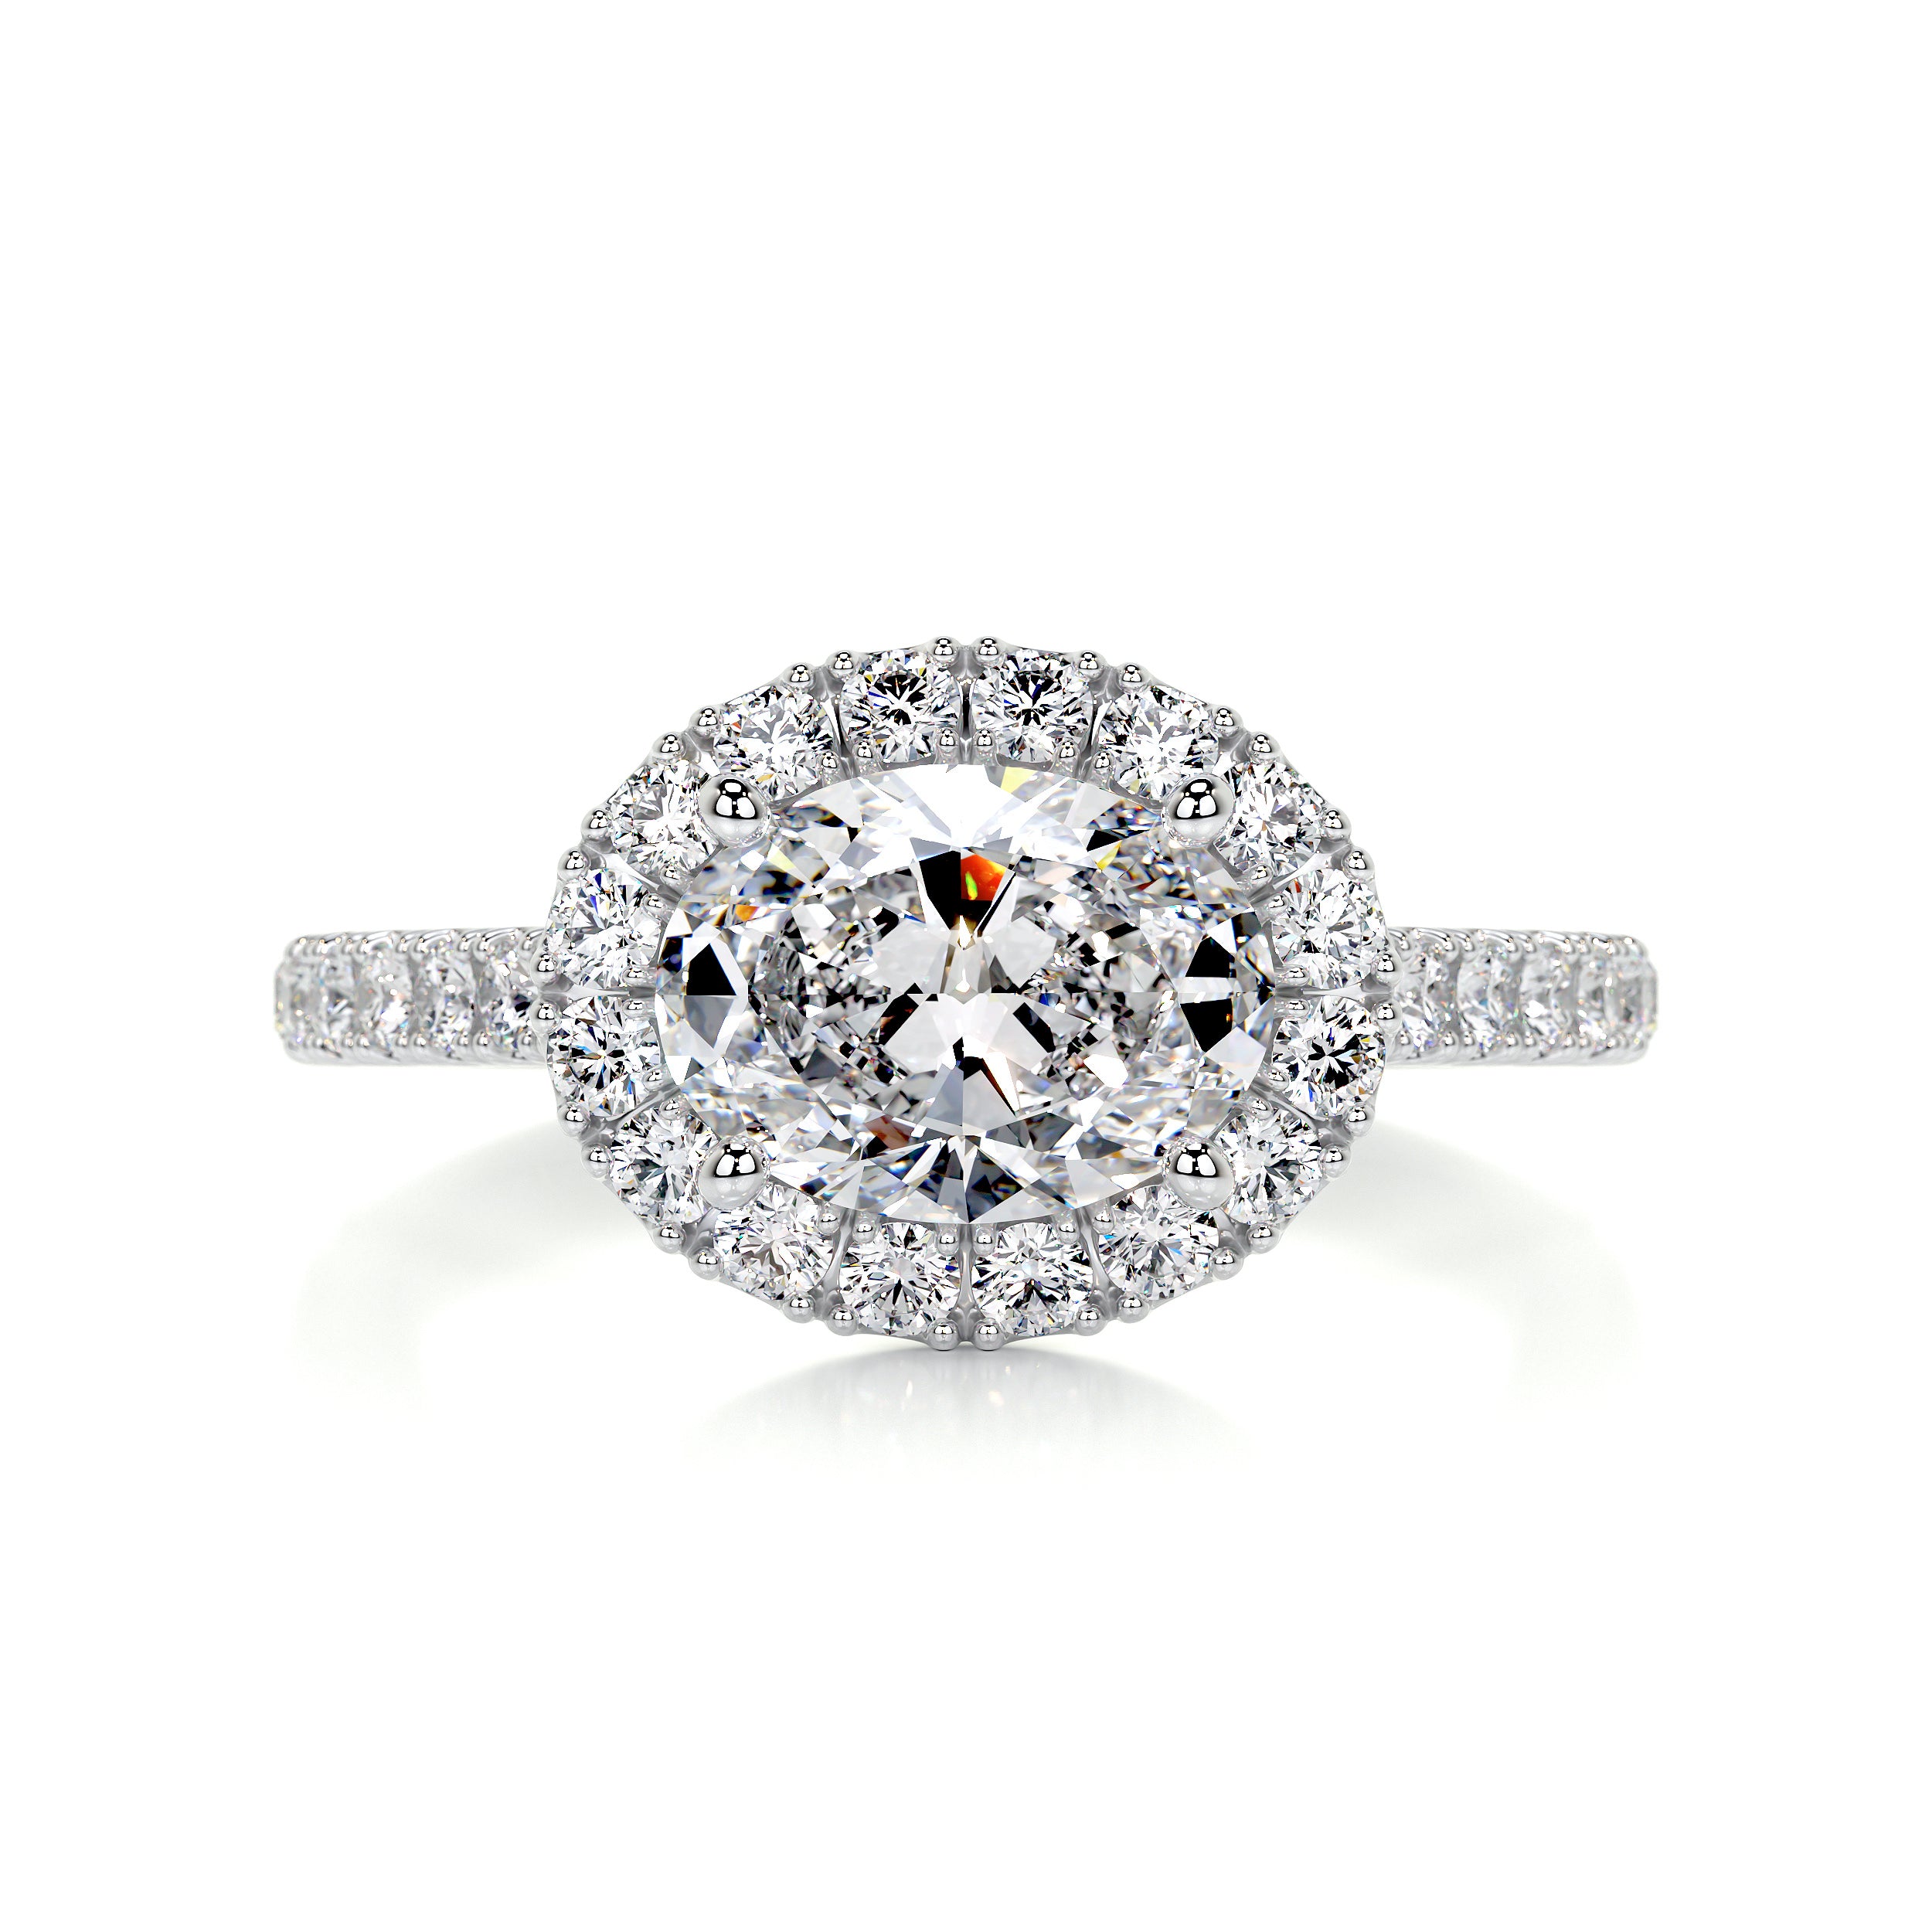 Alessandra Diamond Engagement Ring   (1.30 Carat) -Platinum